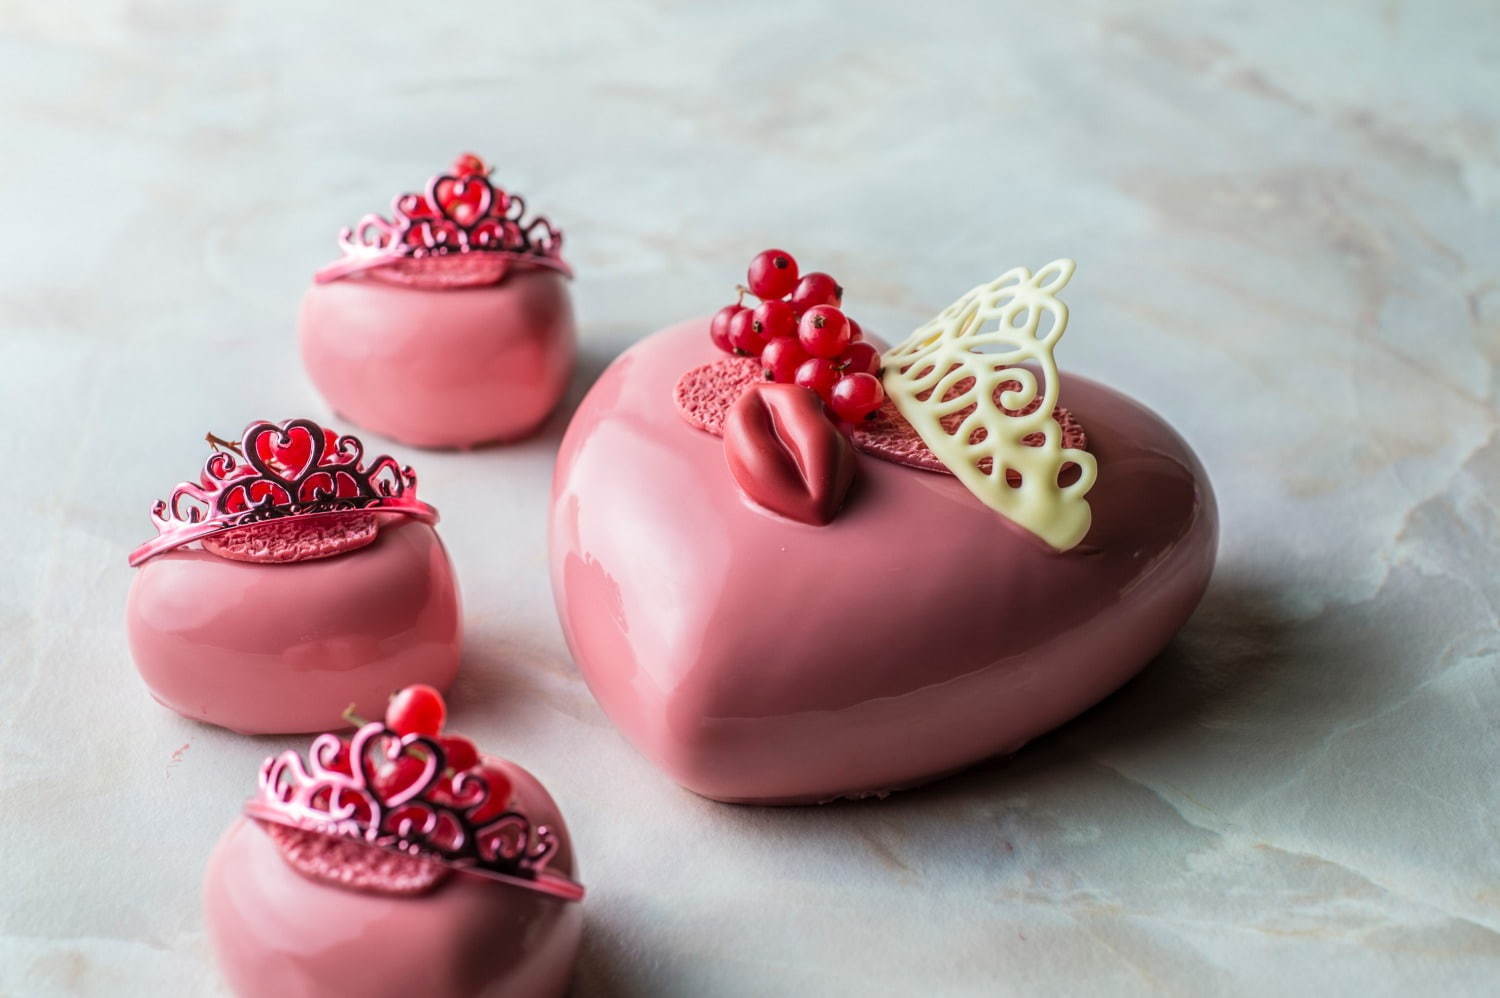 Anaインターコンチネンタルホテル東京のバレンタイン ルビーチョコ 苺のハートケーキやヒョウ柄チョコ ファッションプレス